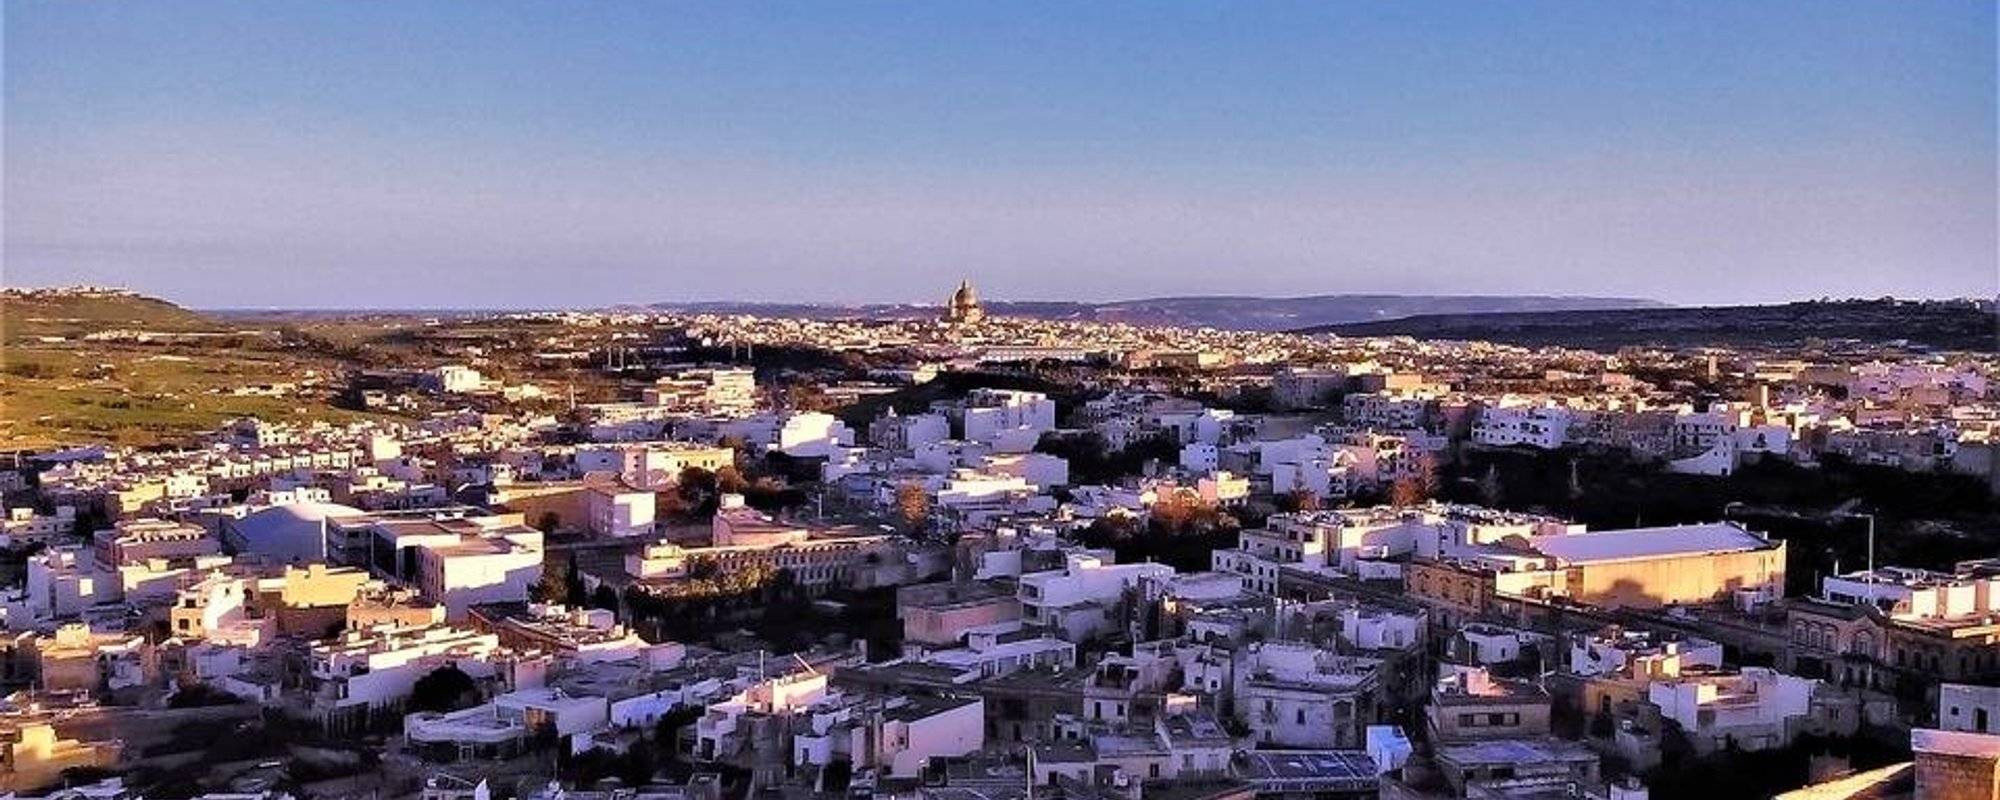 Cityscape Photography: Victoria, capital city of Maltese island of Gozo